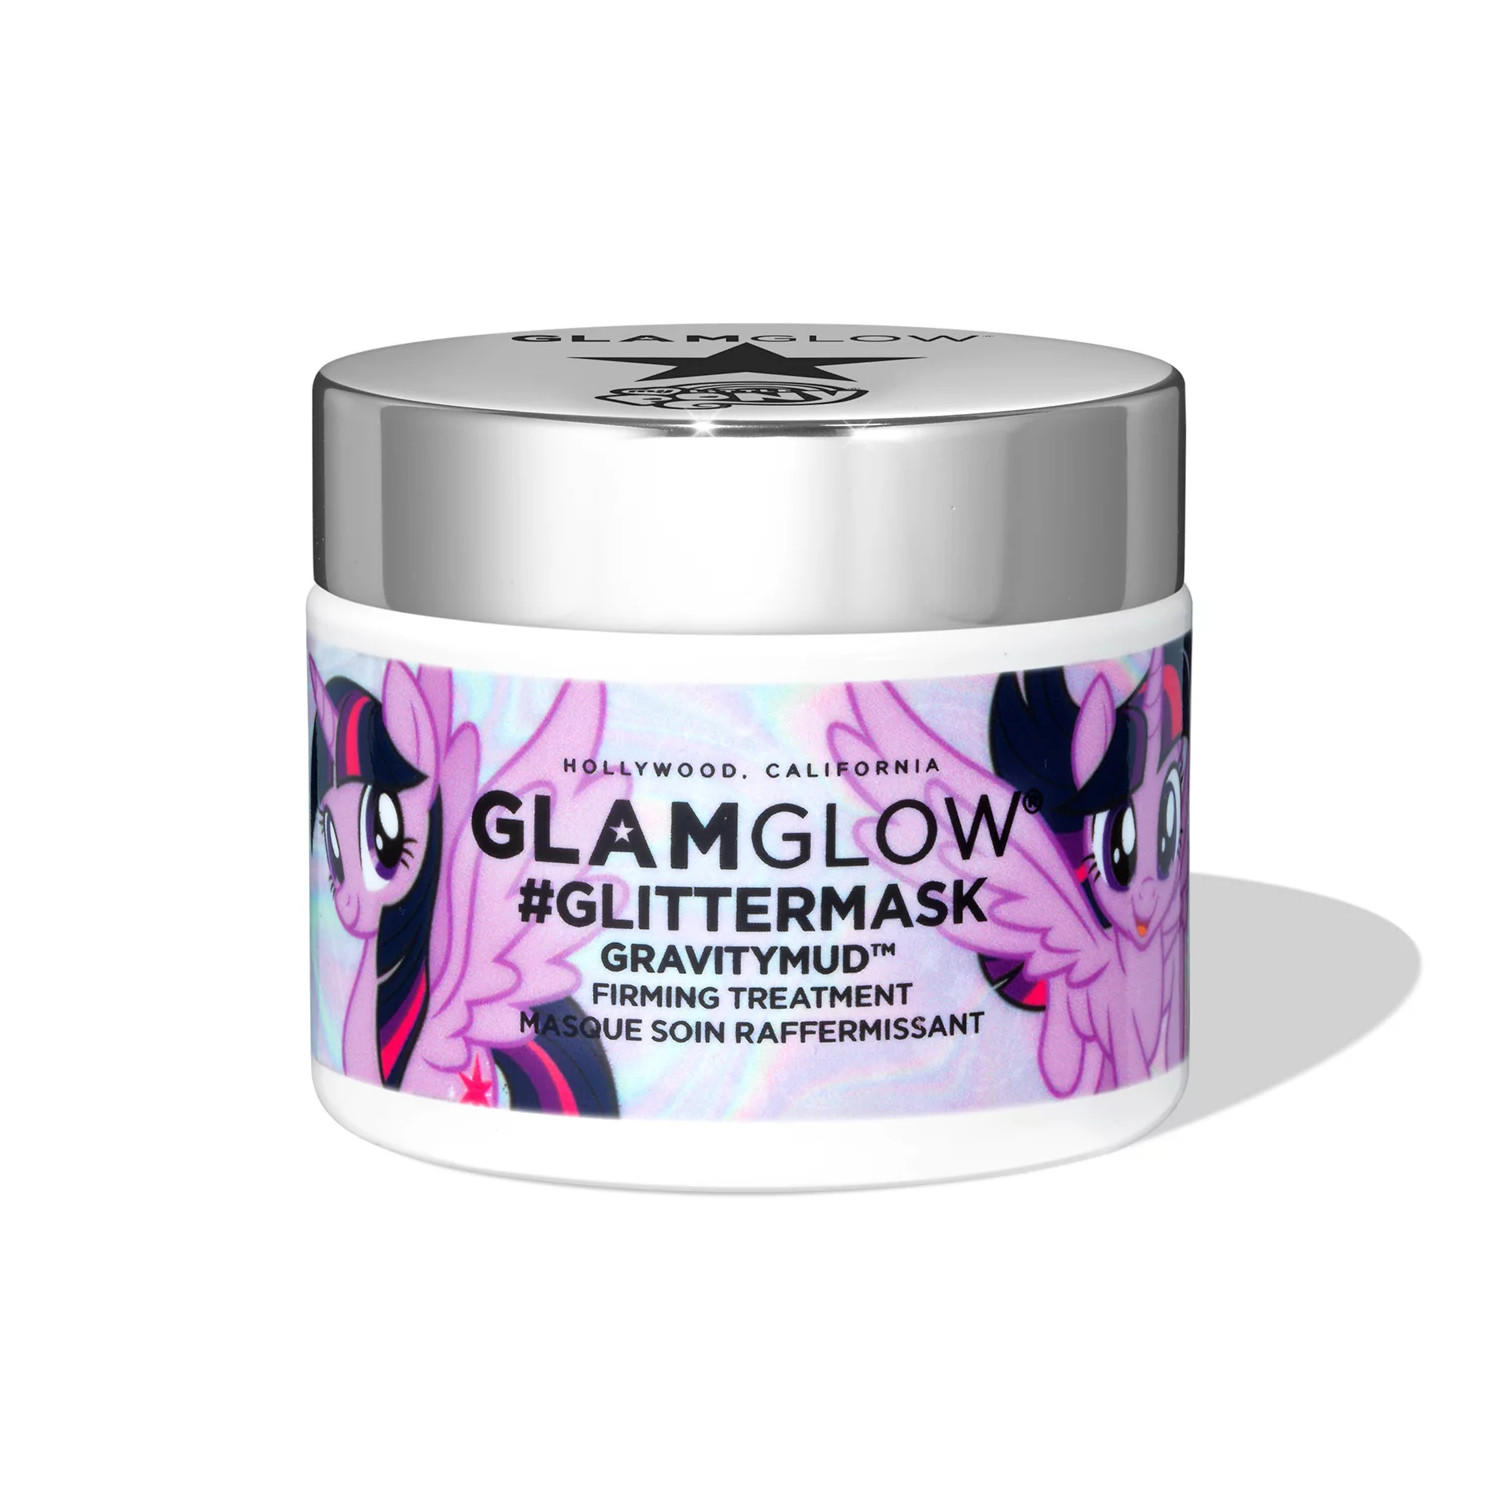 GlamGlow x My Little Pony Gravitymud #Glittermask